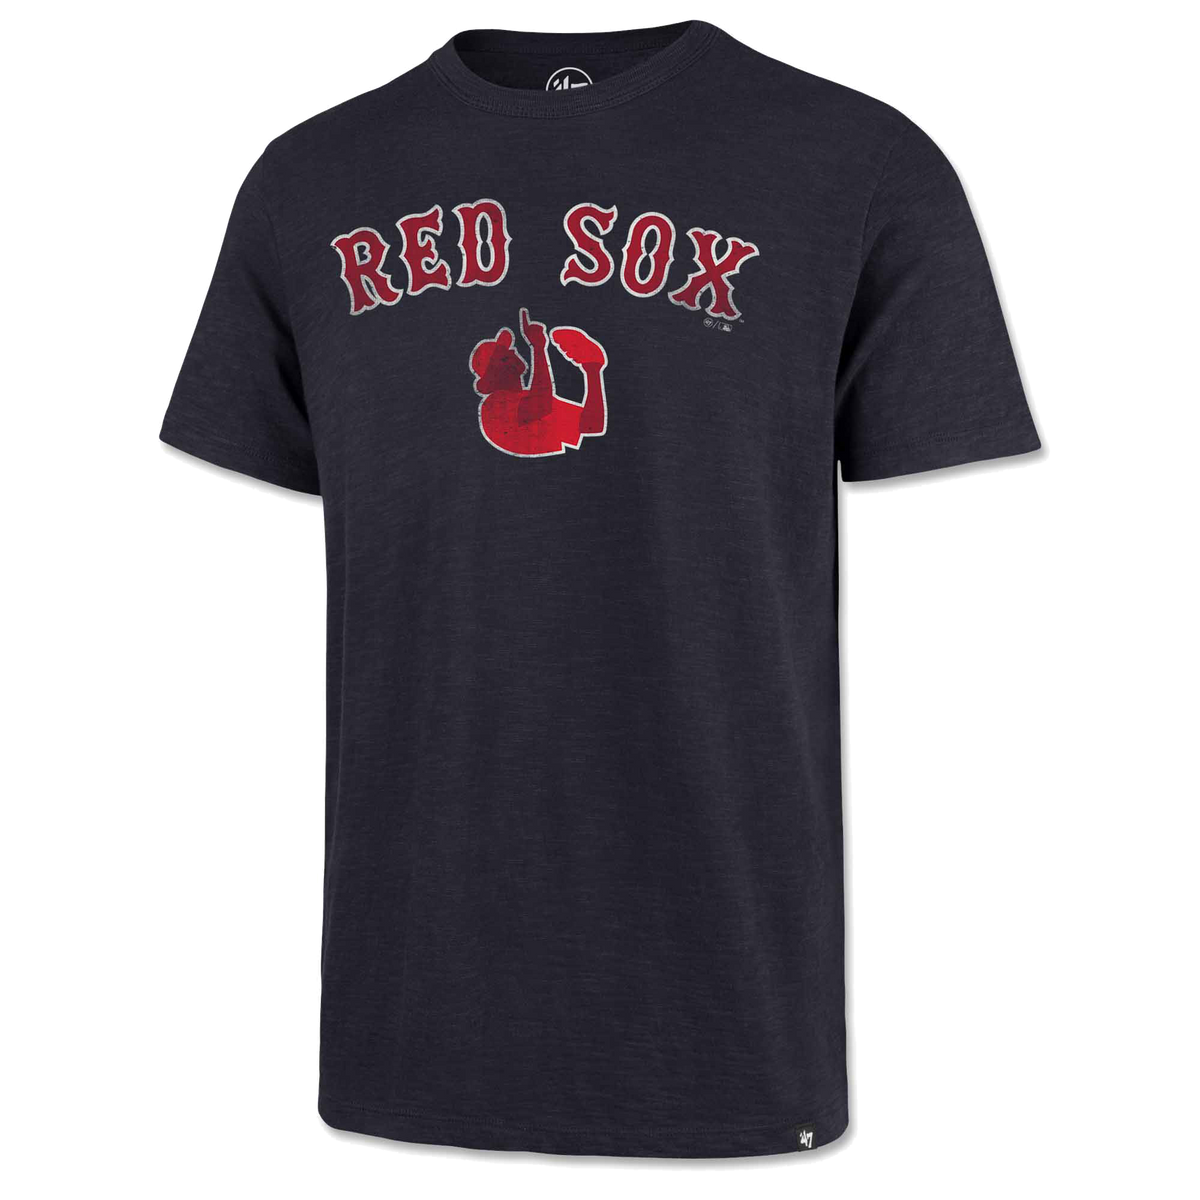 Pedro Martínez Boston Red Sox baseball player Vintage shirt